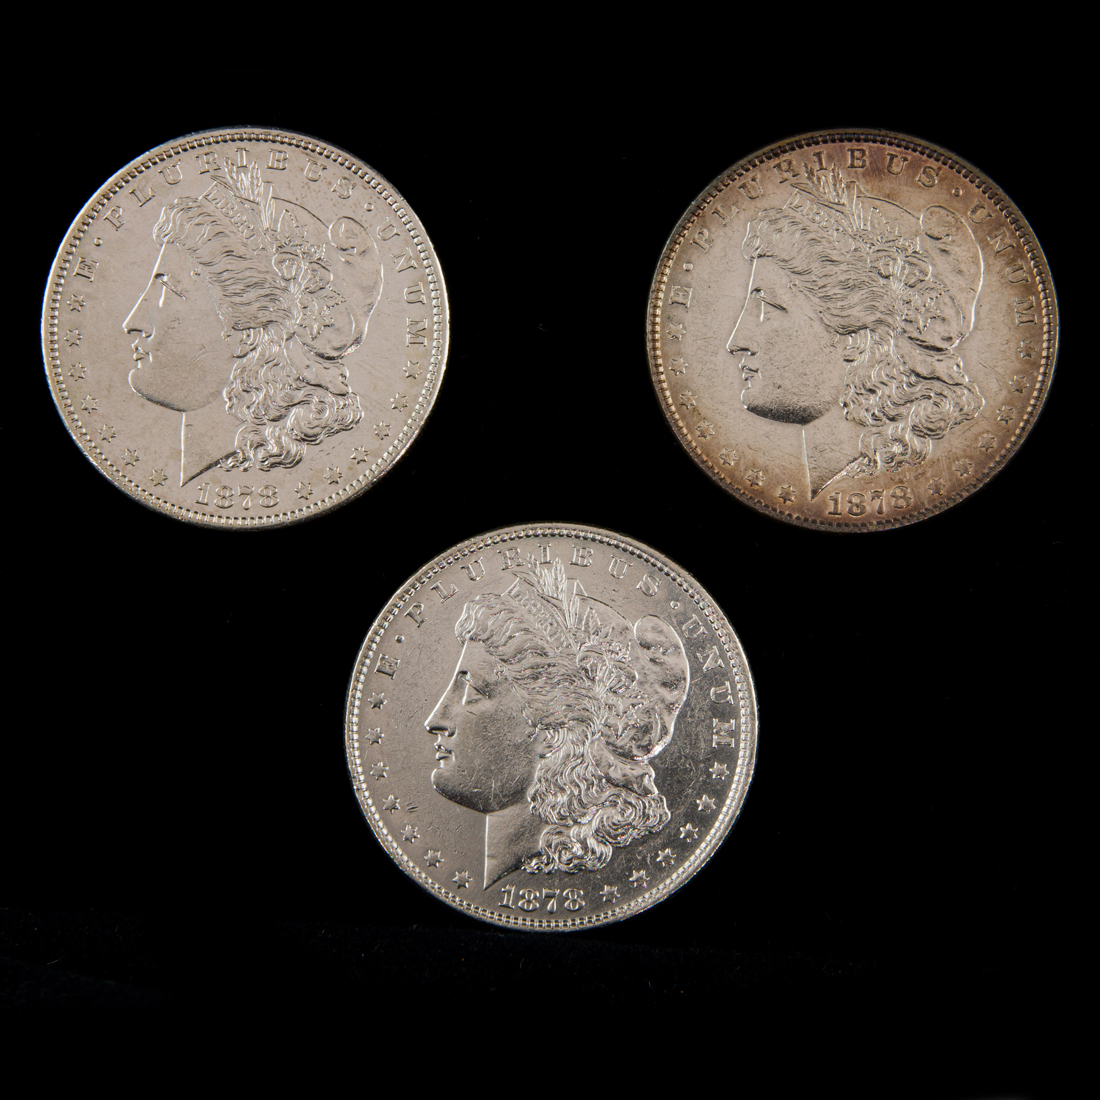  LOT OF 3 SILVER DOLLARS 1878 2d197f